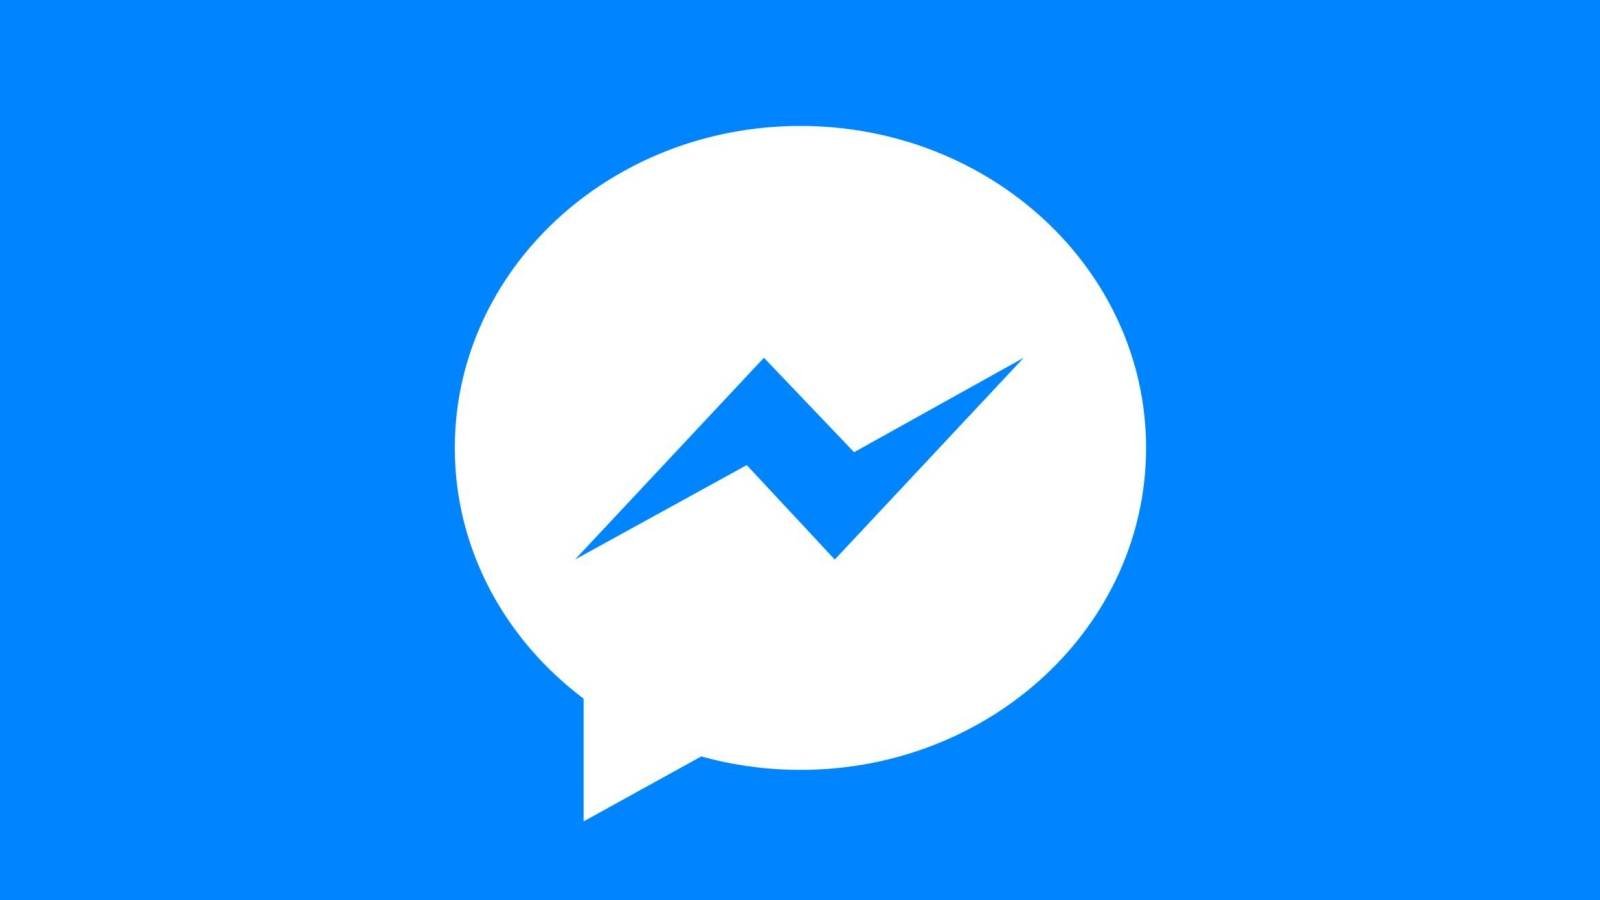 L'AVVISO serio di Facebook Messenger prende di mira milioni di persone